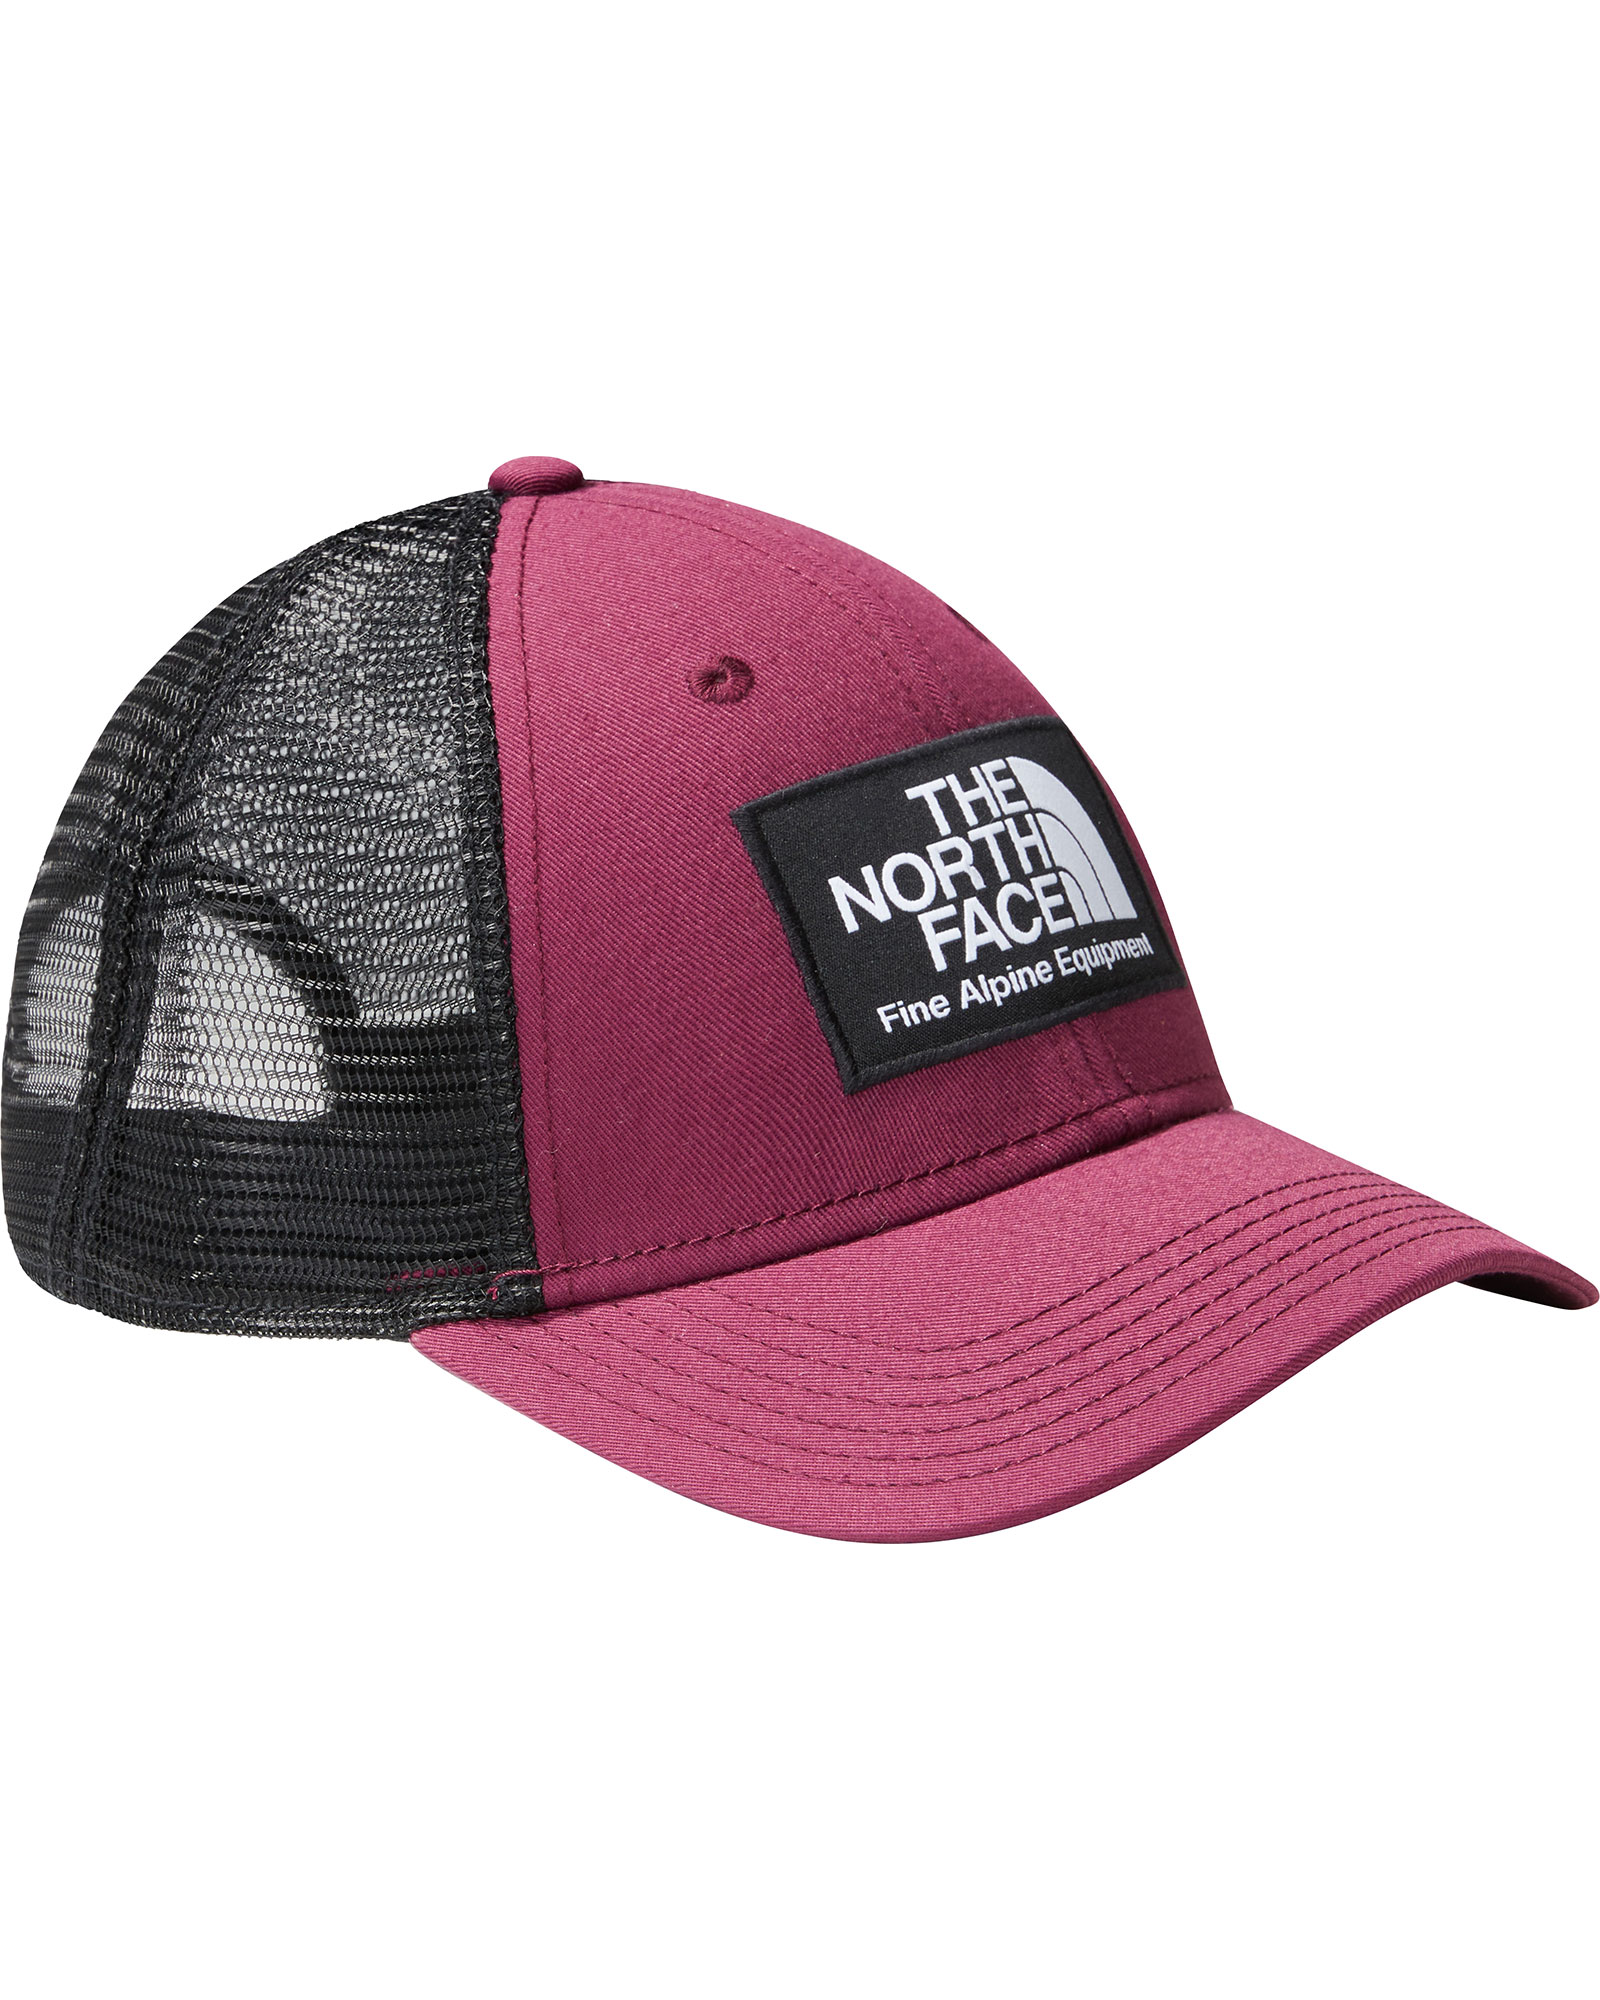 The North Face Mudder Trucker Hat - Boysenberry